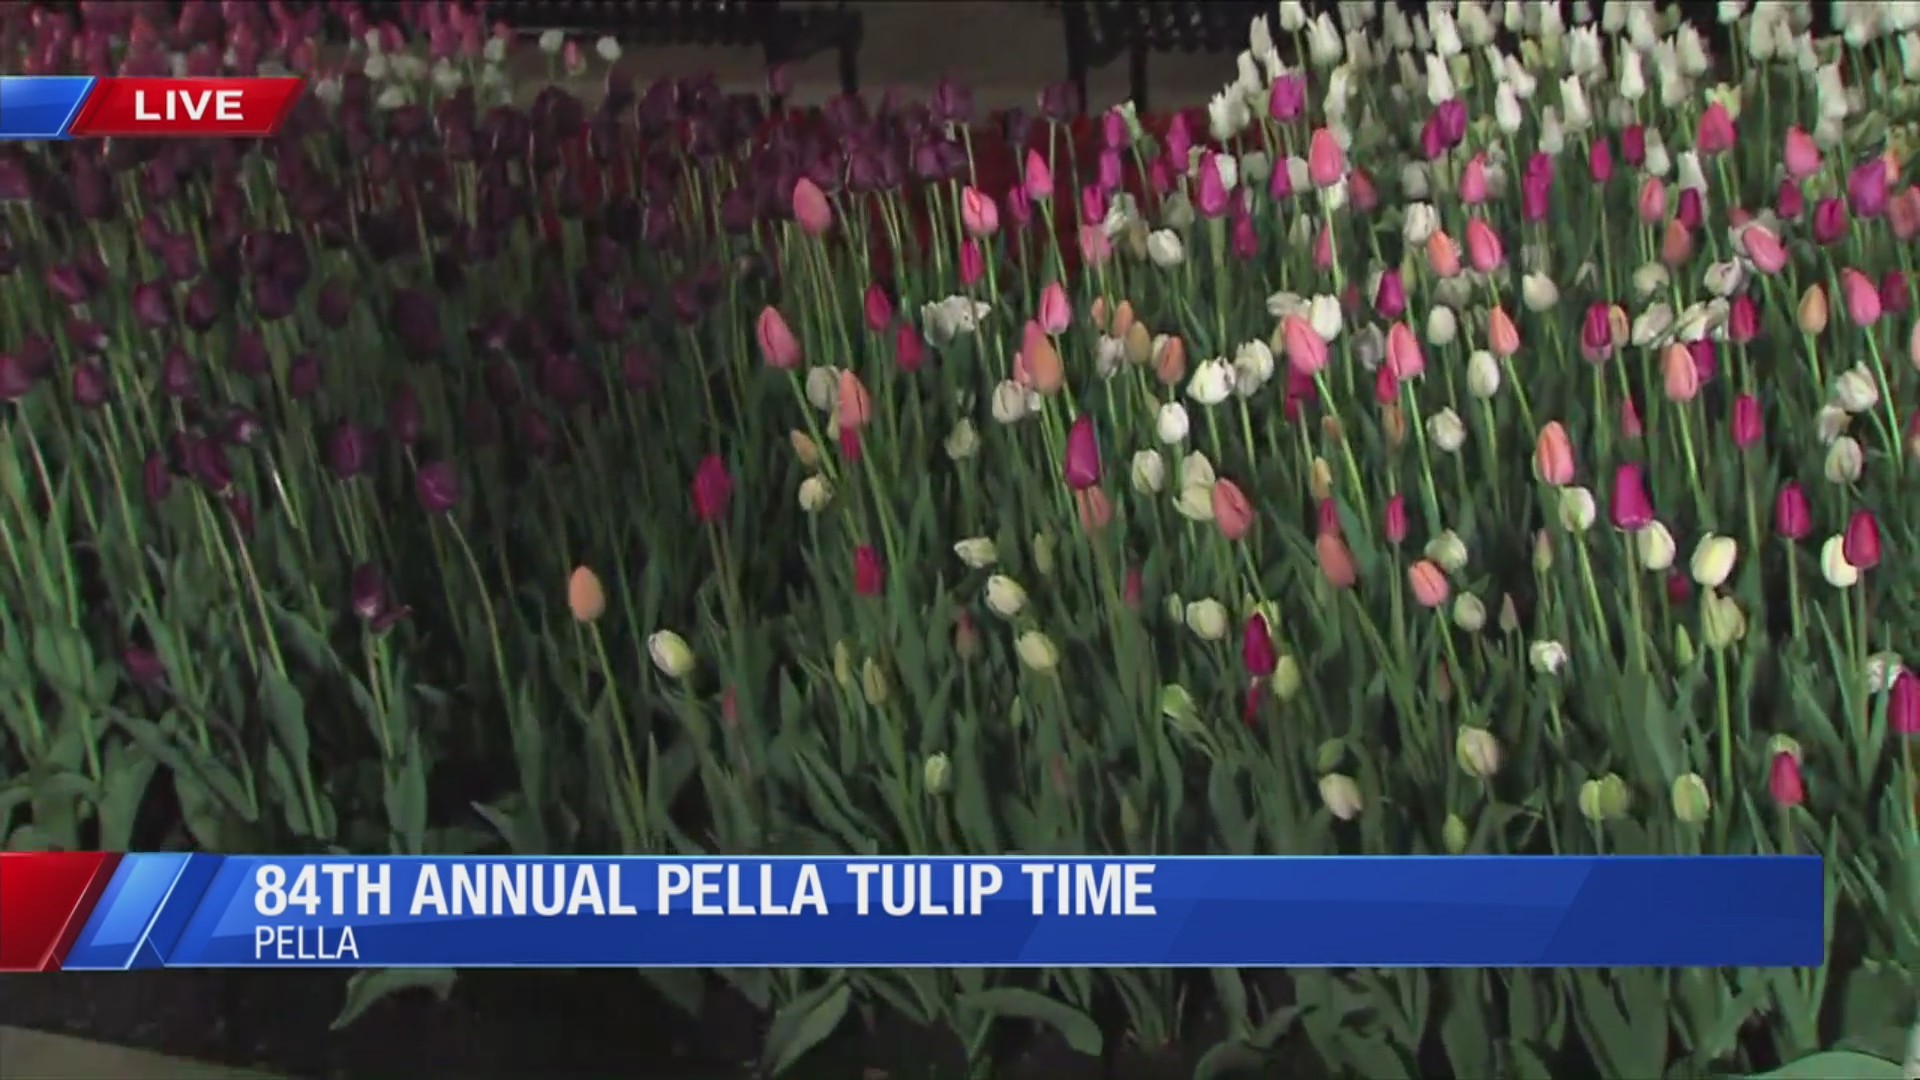 Pella Tulip Time 2019 kicks off today